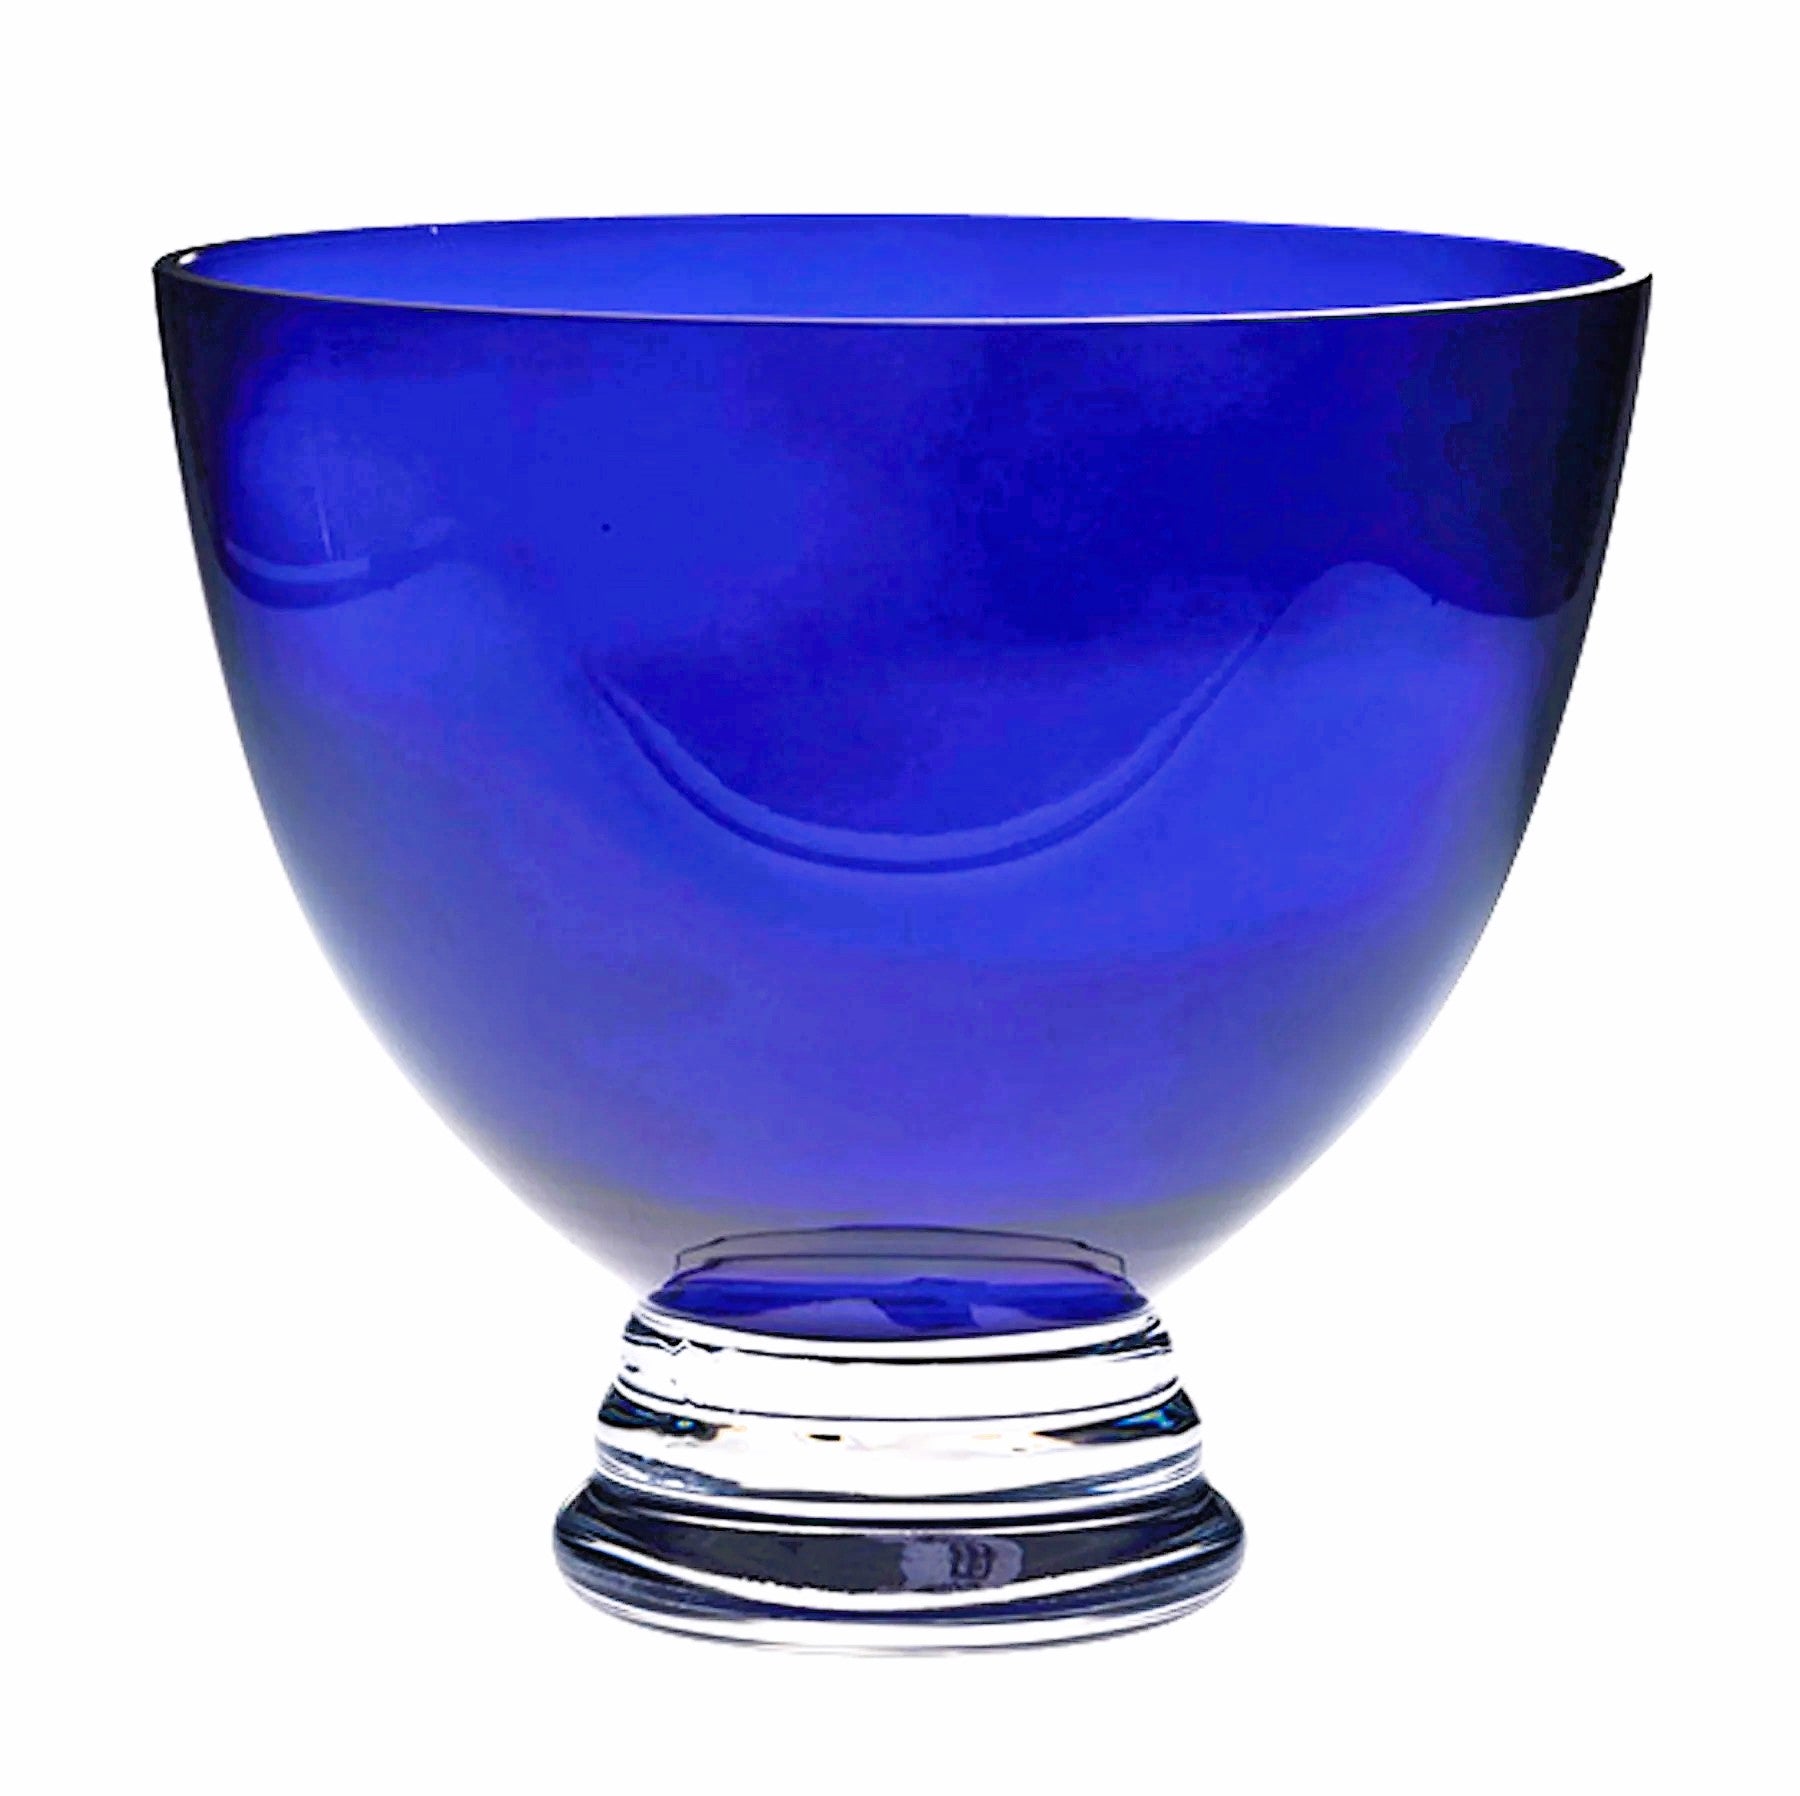 Cobalt Crystal Bowl 9.25"diameter X 8.5"high Barski Crystal collection